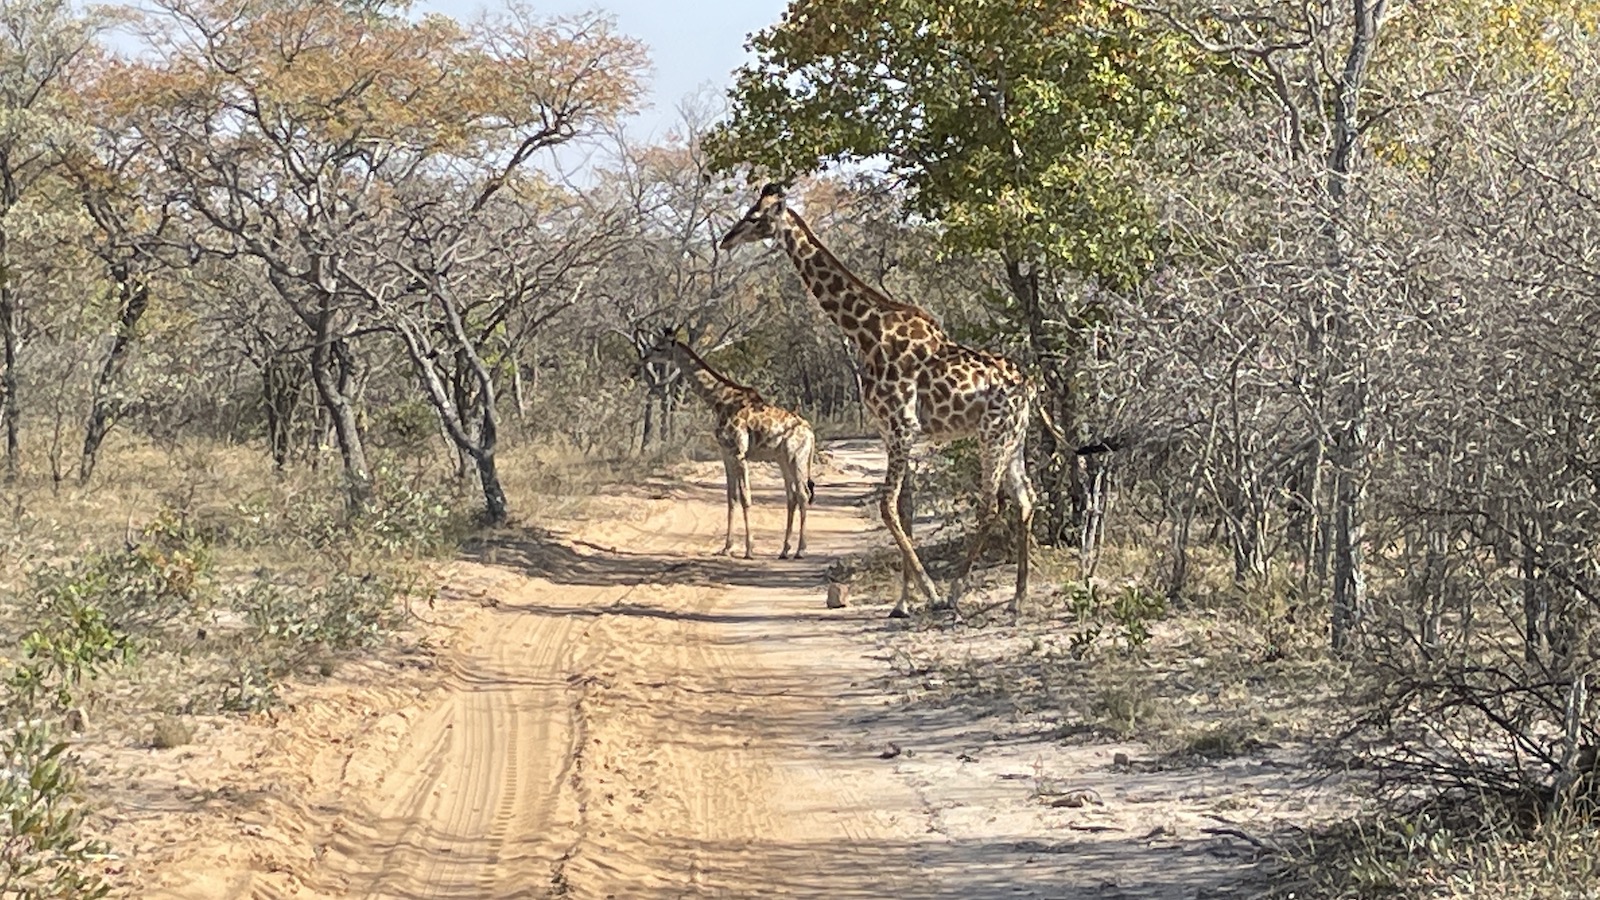 Sabatana-Private-Reserve-Adult-Baby-Giraffe-Crossing-Road-Point-Hacks-by-Daniel-Sciberras